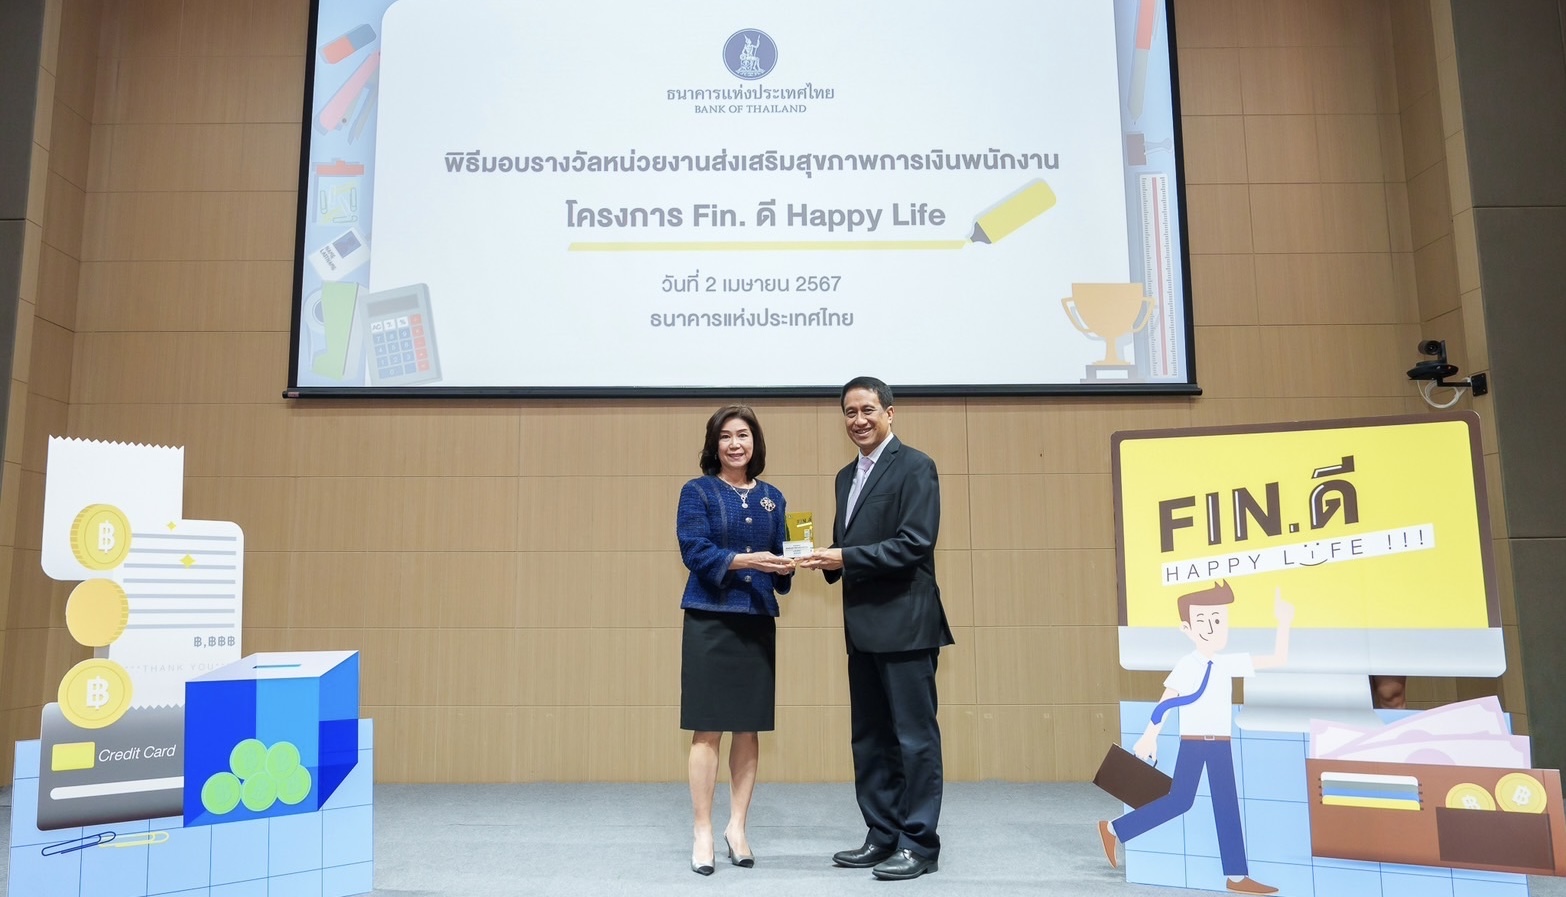 OCEAN LIFE ไทยสมุทร รับรางวัล “หน่วยงานส่งเสริมสุขภาพการเงินพนักงานระดับดีเด่น” ในโครงการ Fin. ดี Happy Life ประจำปี 2567 ของธนาคารแห่งประเทศไทย